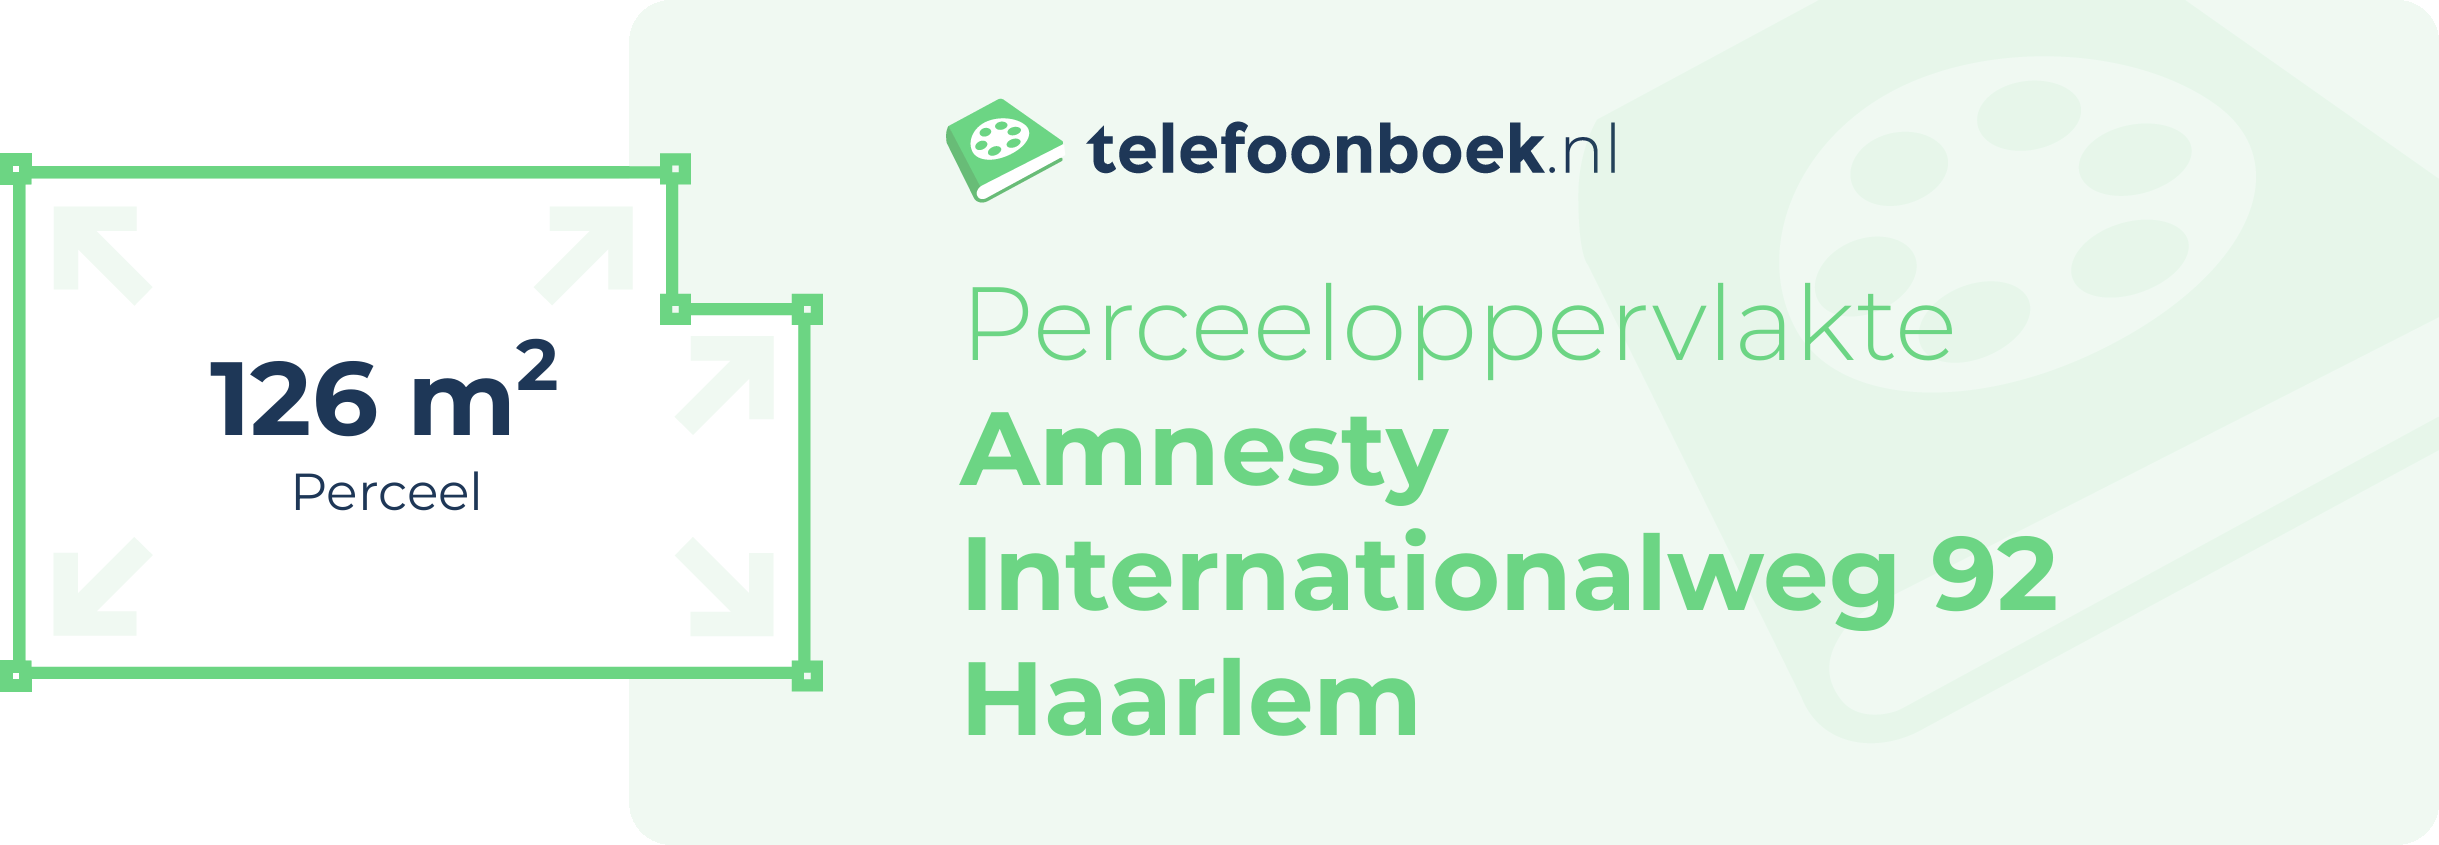 Perceeloppervlakte Amnesty Internationalweg 92 Haarlem